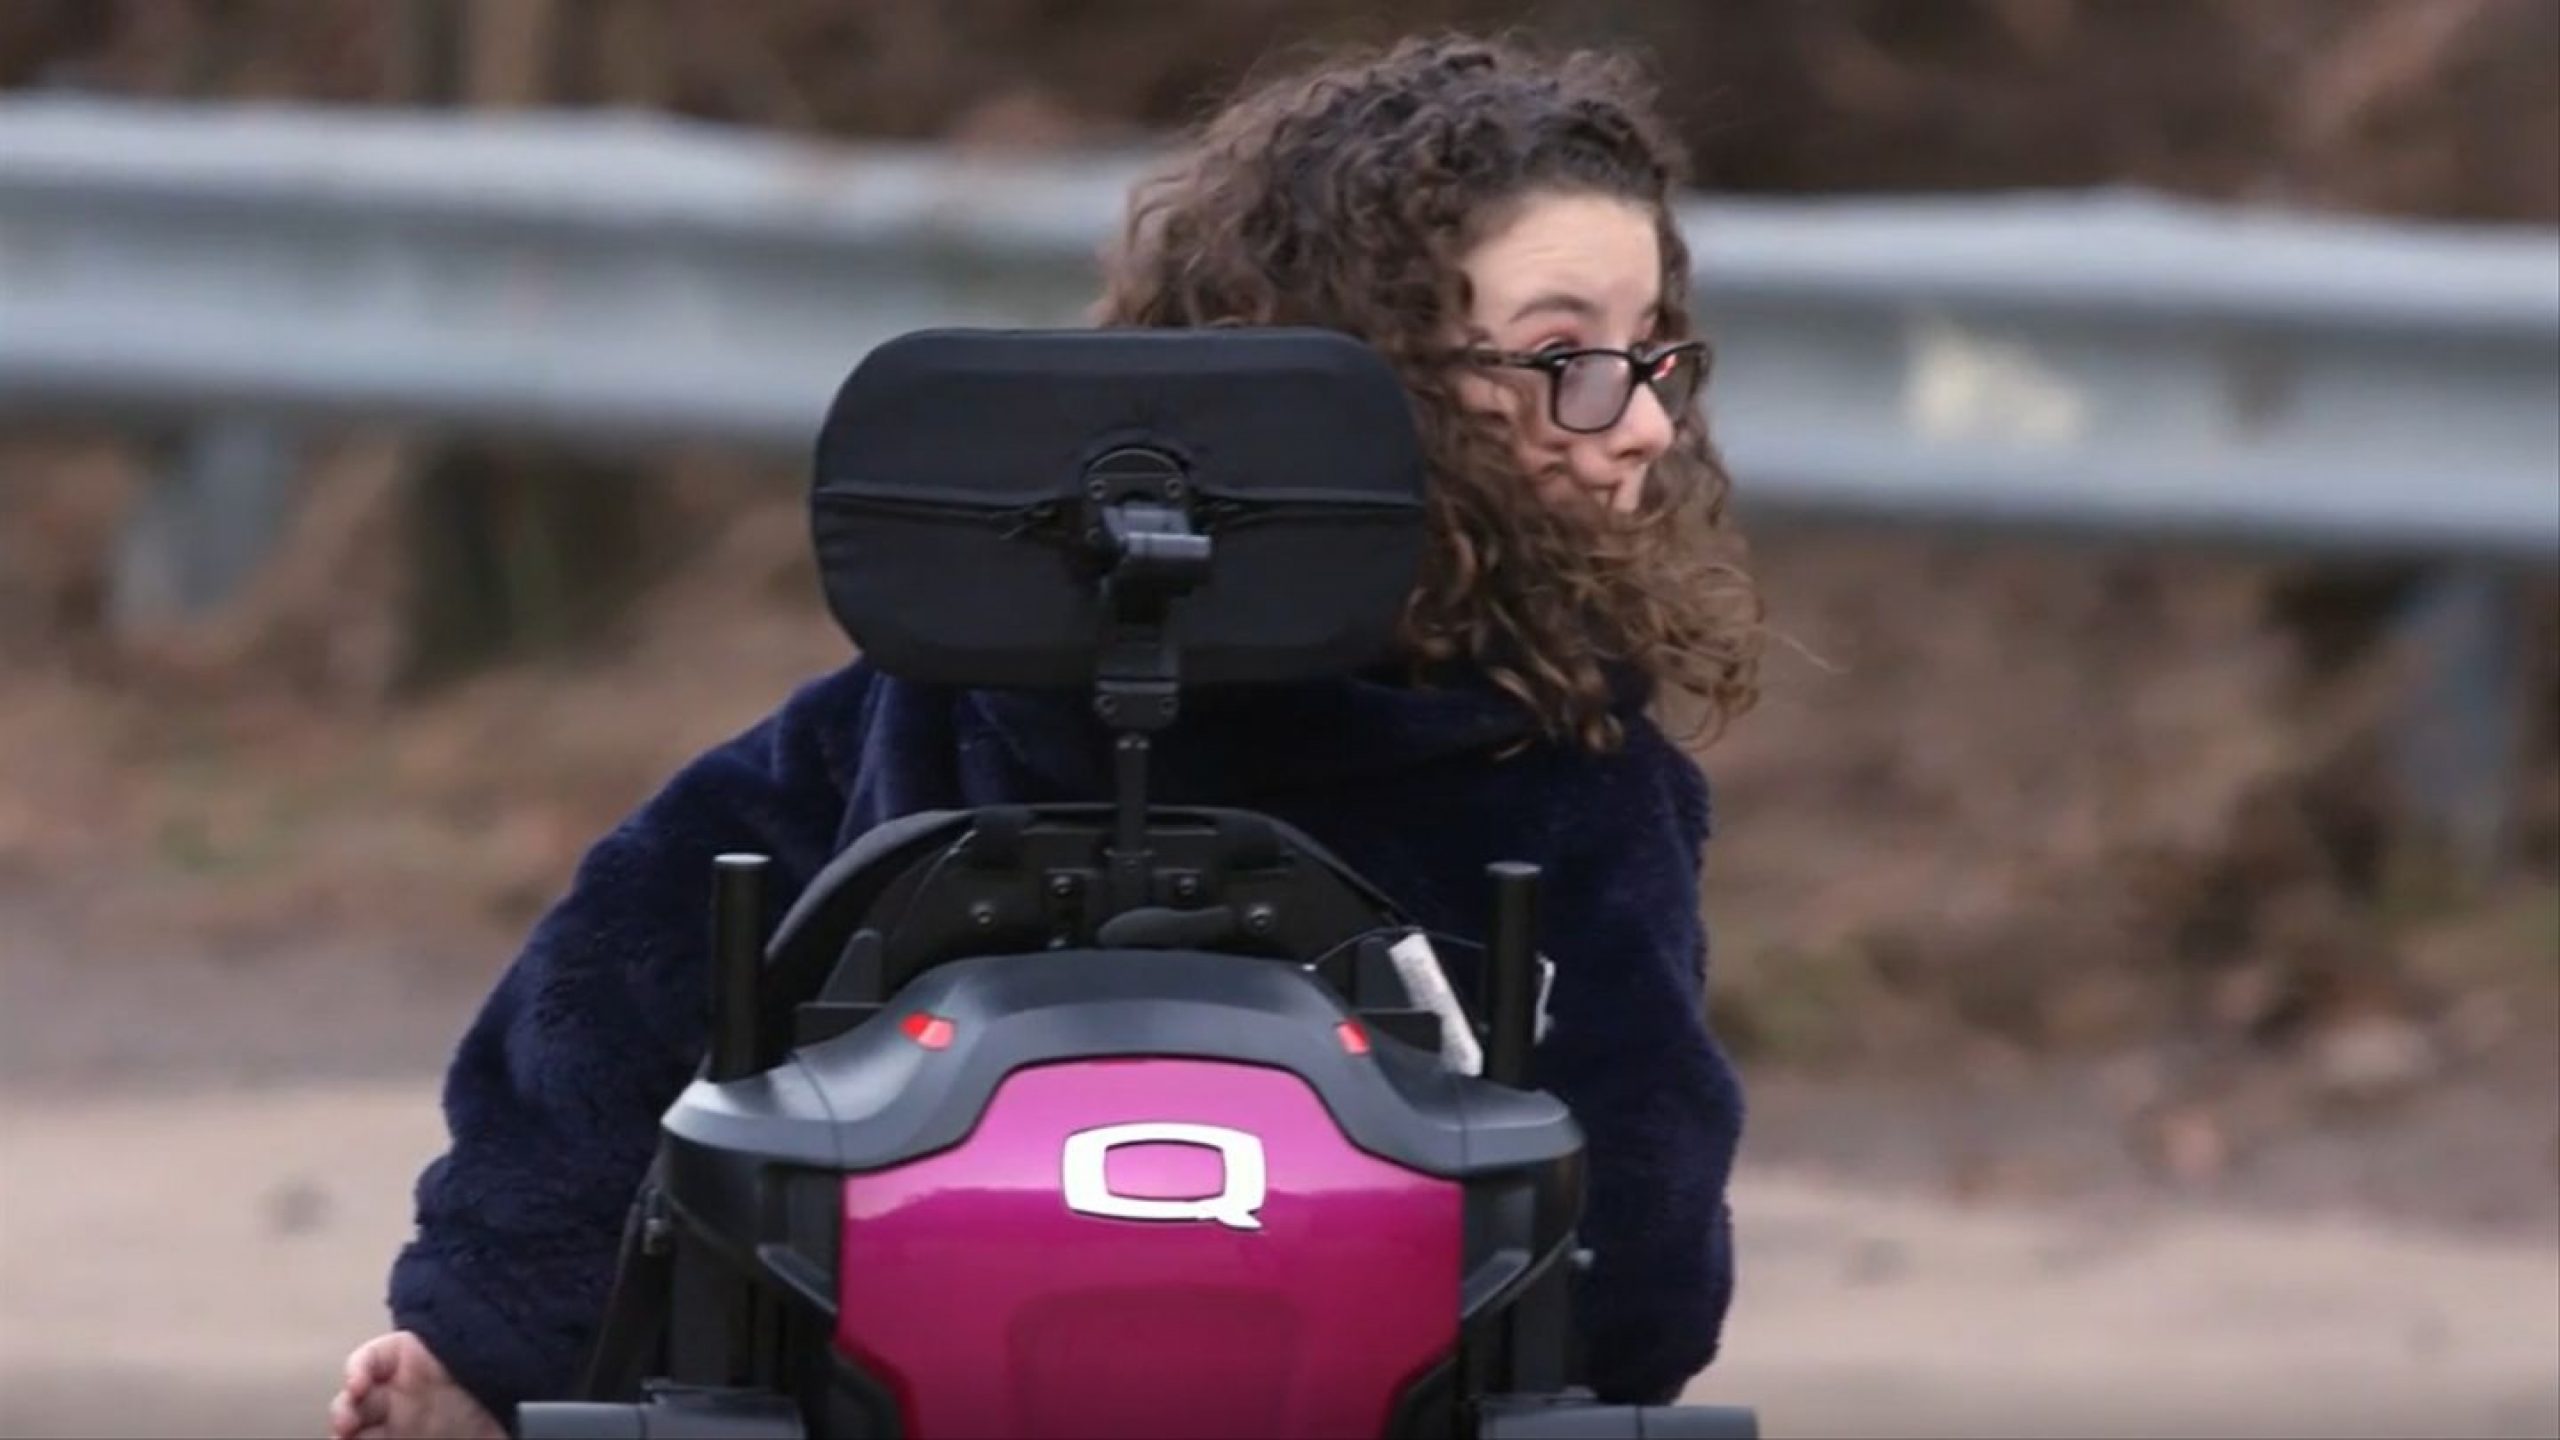 ‘Like Everyone Else’: Ali Gets A Brand-New Wheelchair On Teen Mom 2